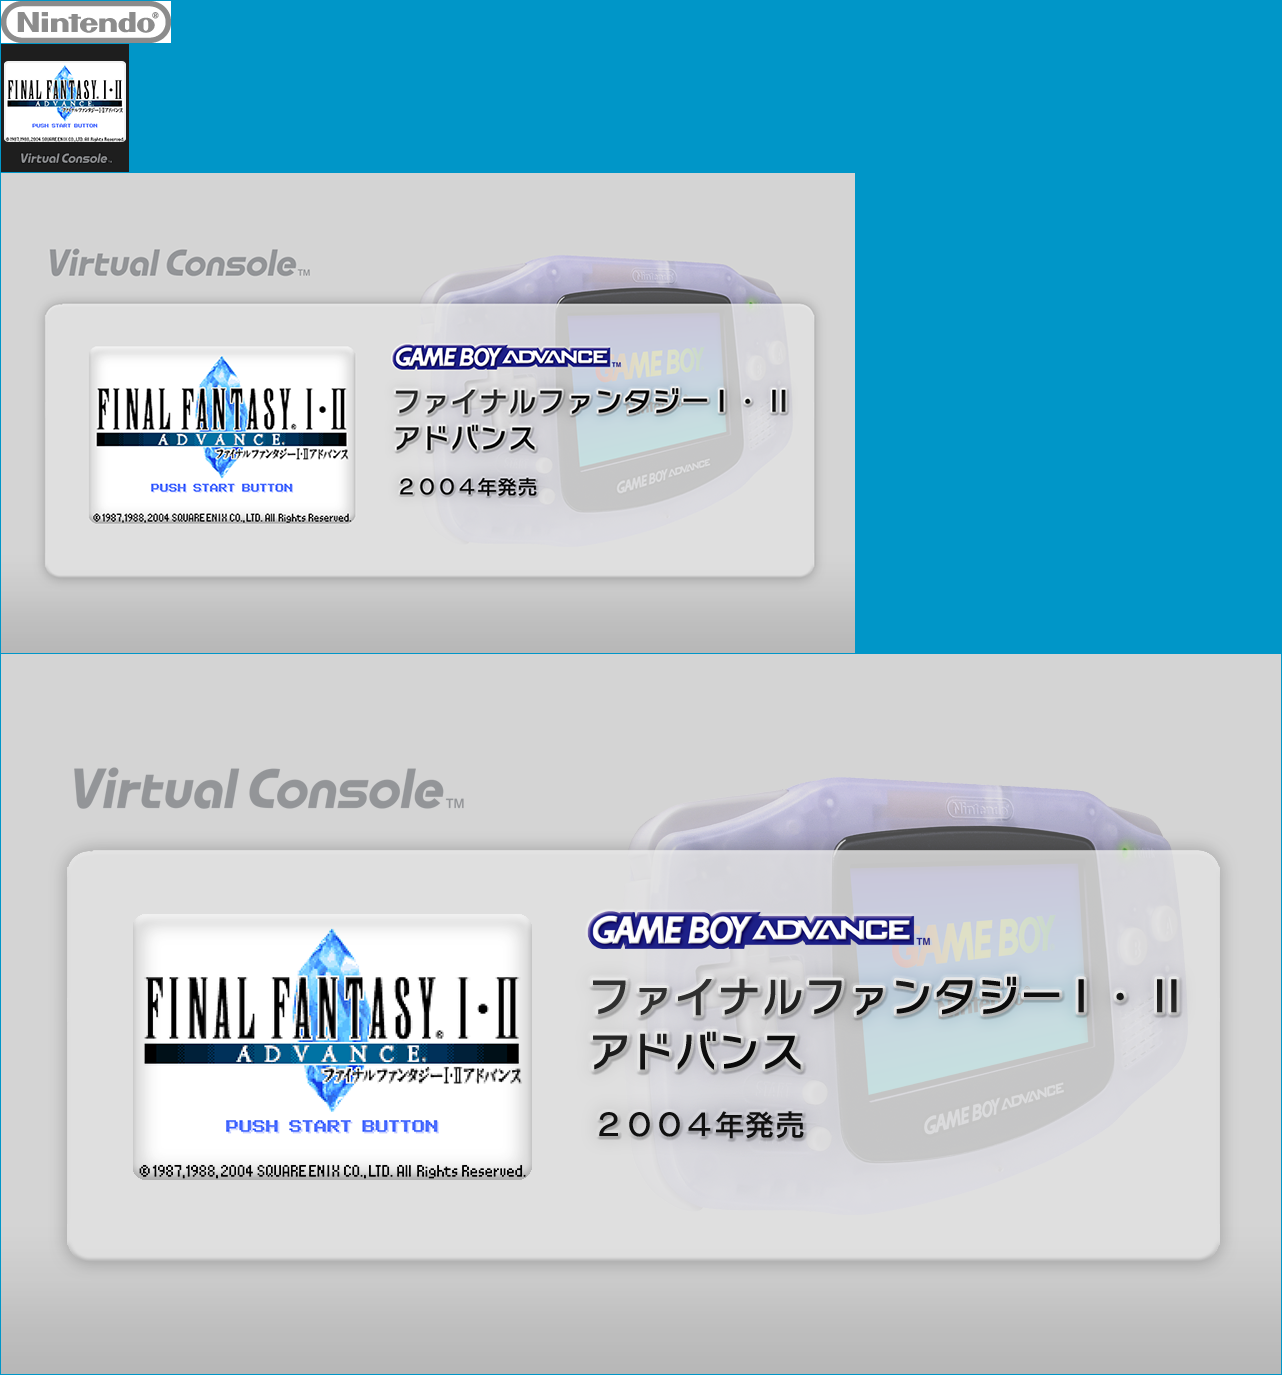 Virtual Console - Final Fantasy I • II Advance